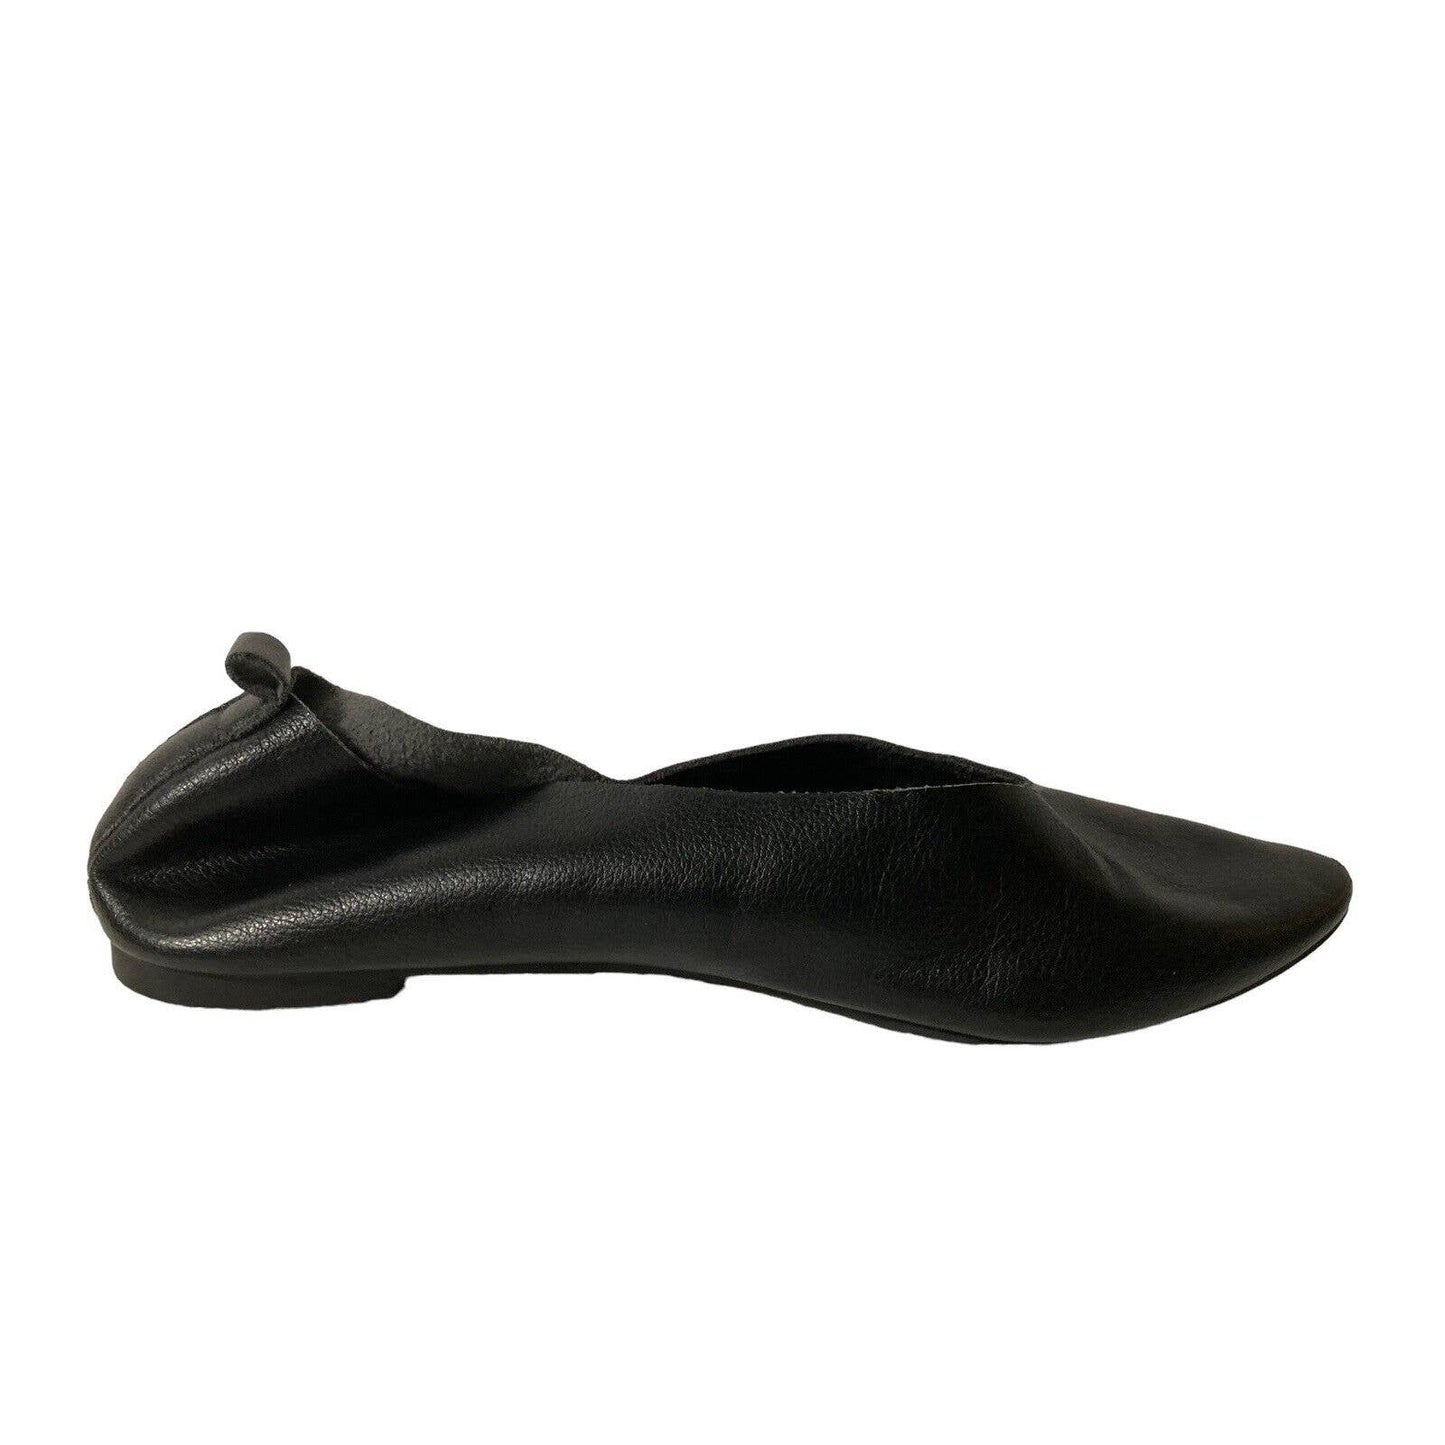 OVS Soild Black Pointed Ballet Flats Size 37 USA 6.5